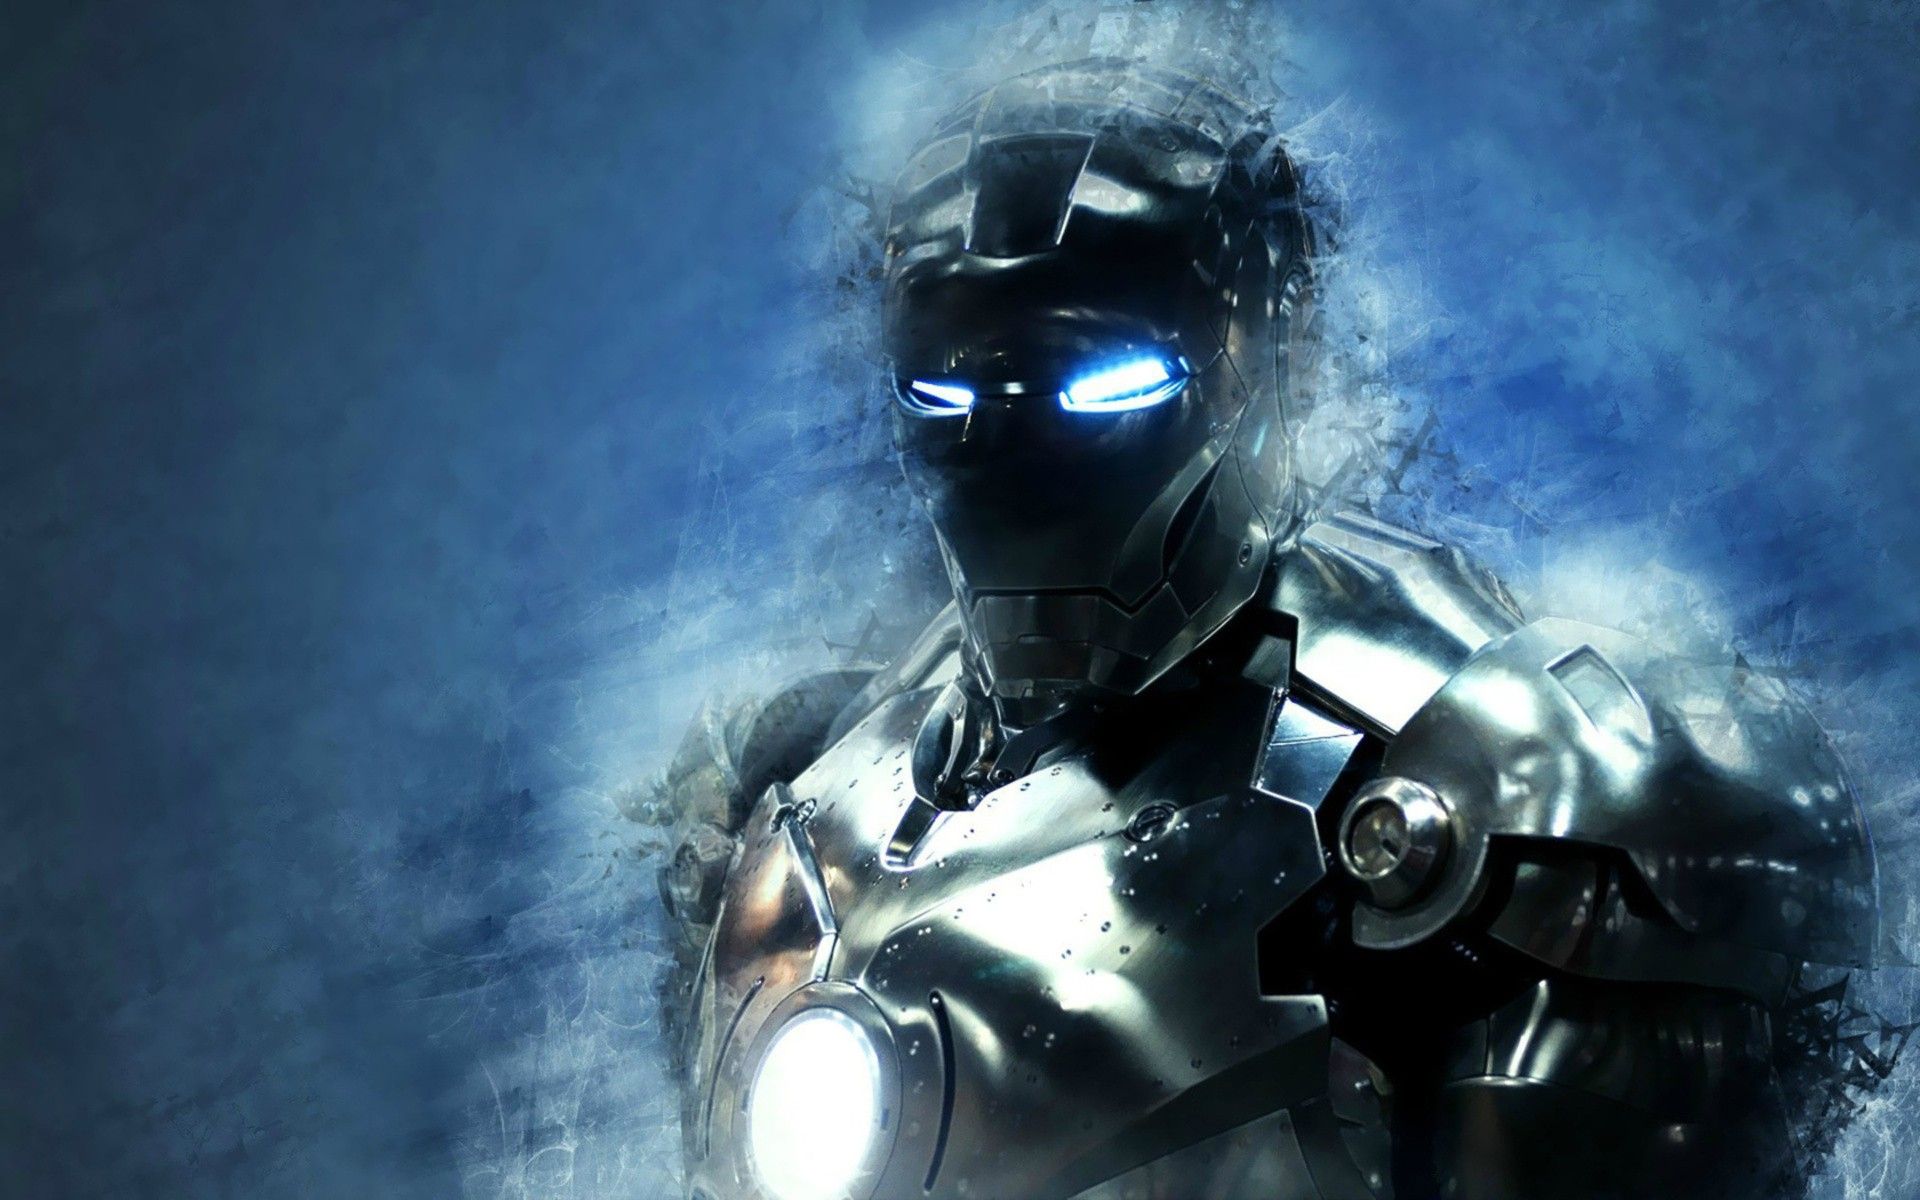 Robot, Comics, Costume Games, Mech, Iron, Suit, Best, Desktop Image, Cyborg, Heroes, Man, Movie Wallpaper, Videogames, Scifi, ironman, Super